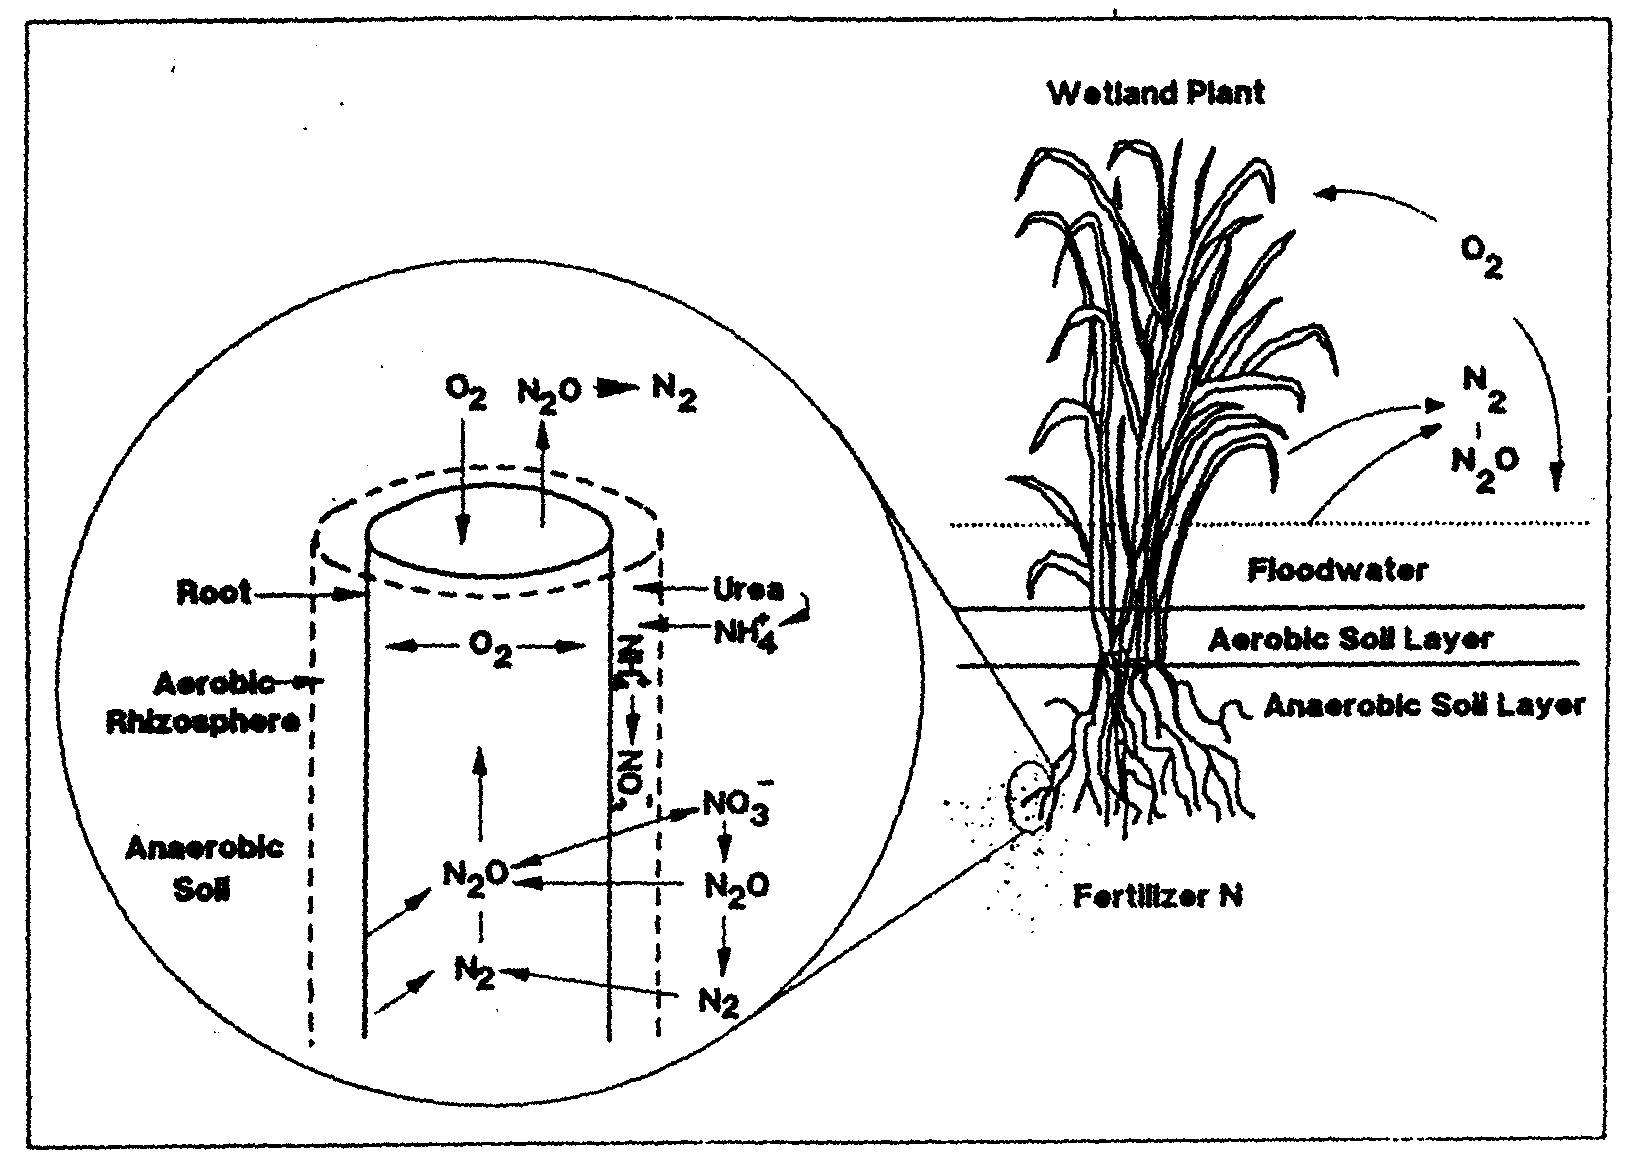 Oxidized rhizosphere, taken from Reddy et al. (1989)